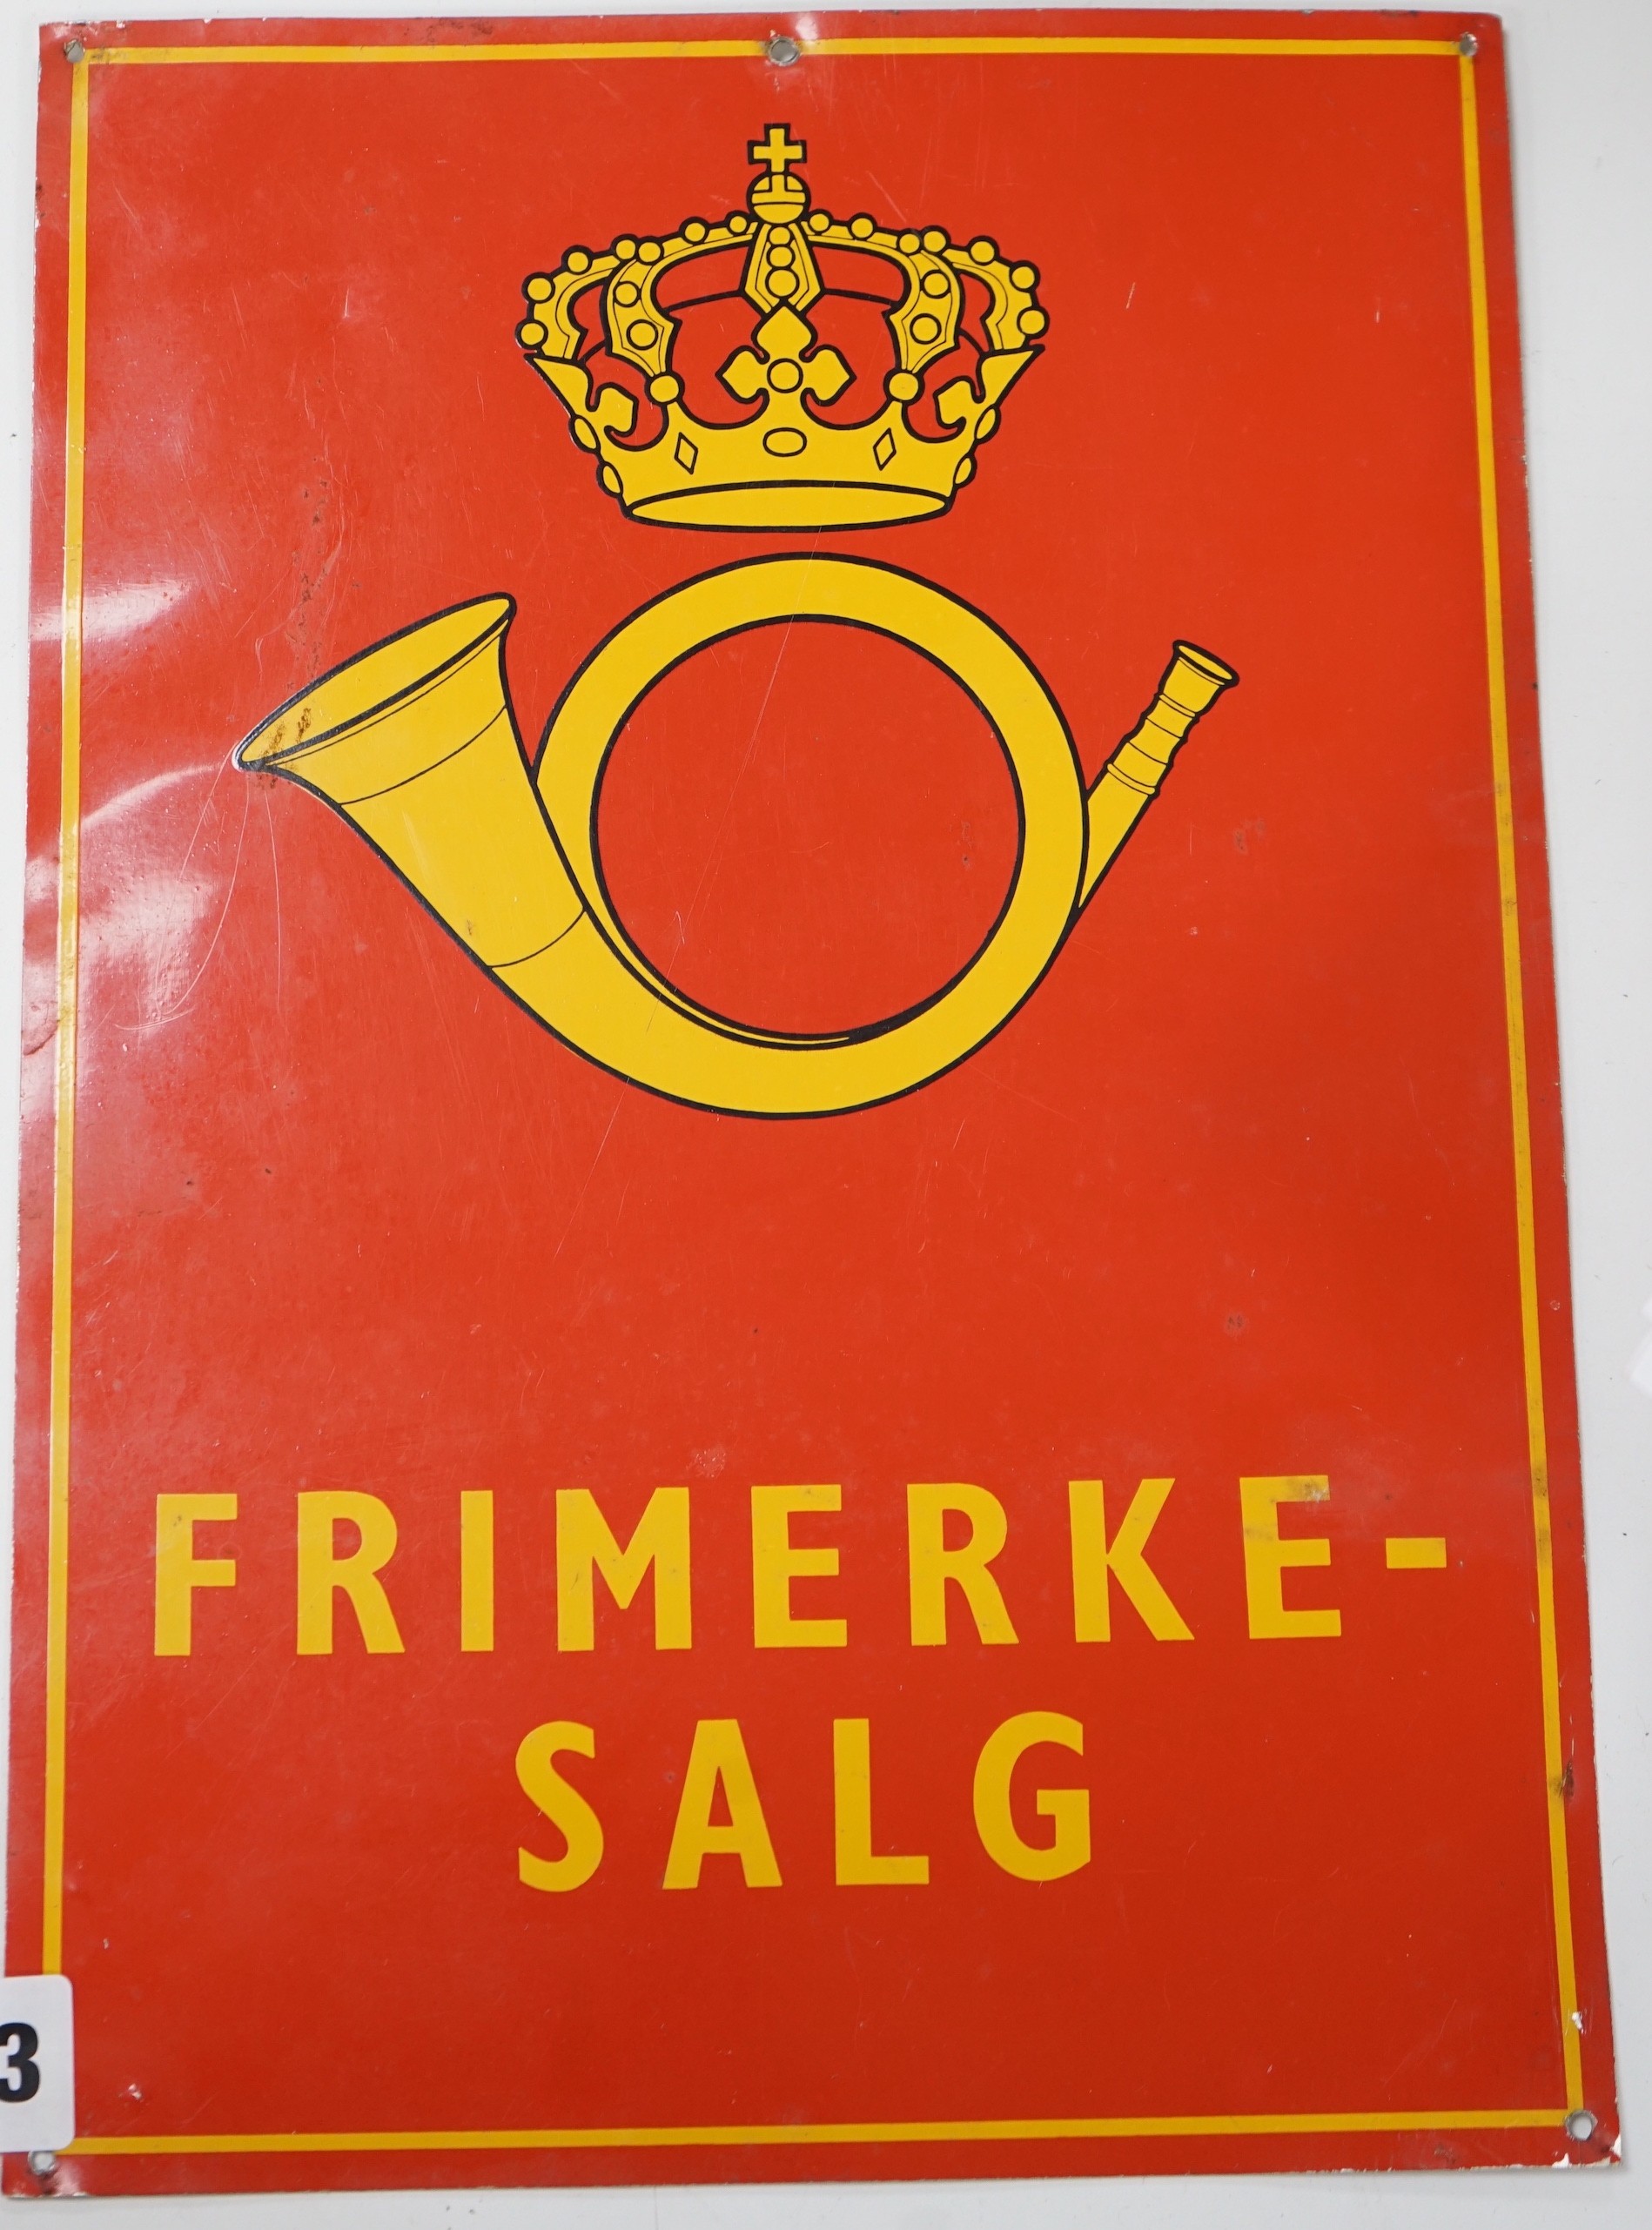 ‘Frimerke-Salg’ – A Norwegian postal service sign, 30x29cm